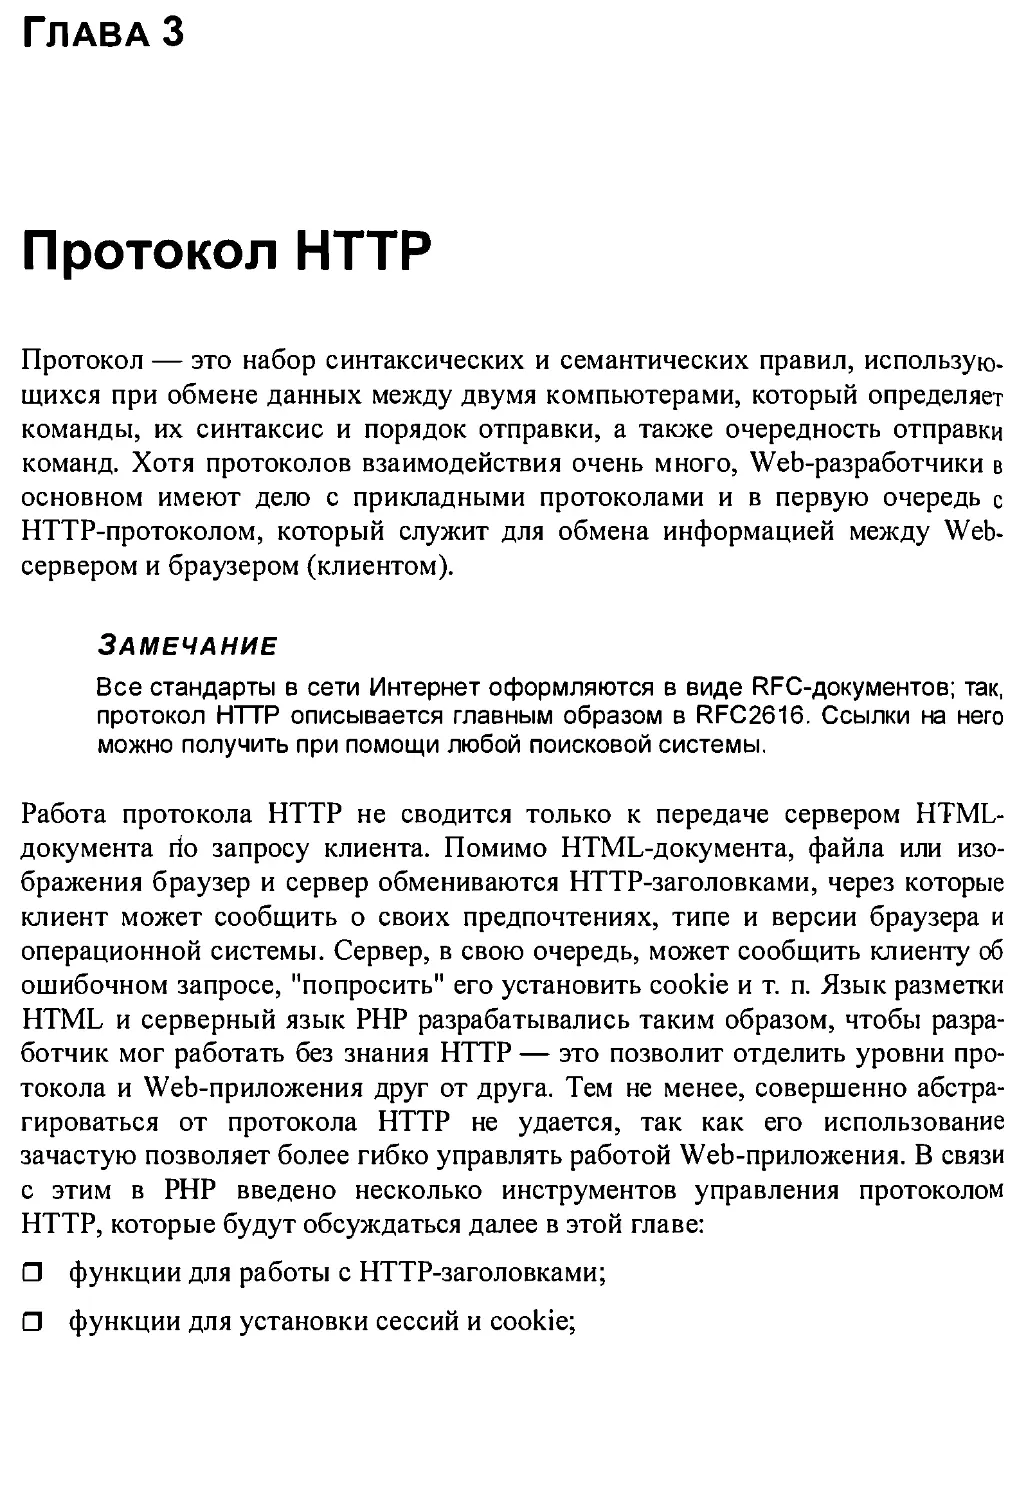 Глава 3. Протокол HTTP